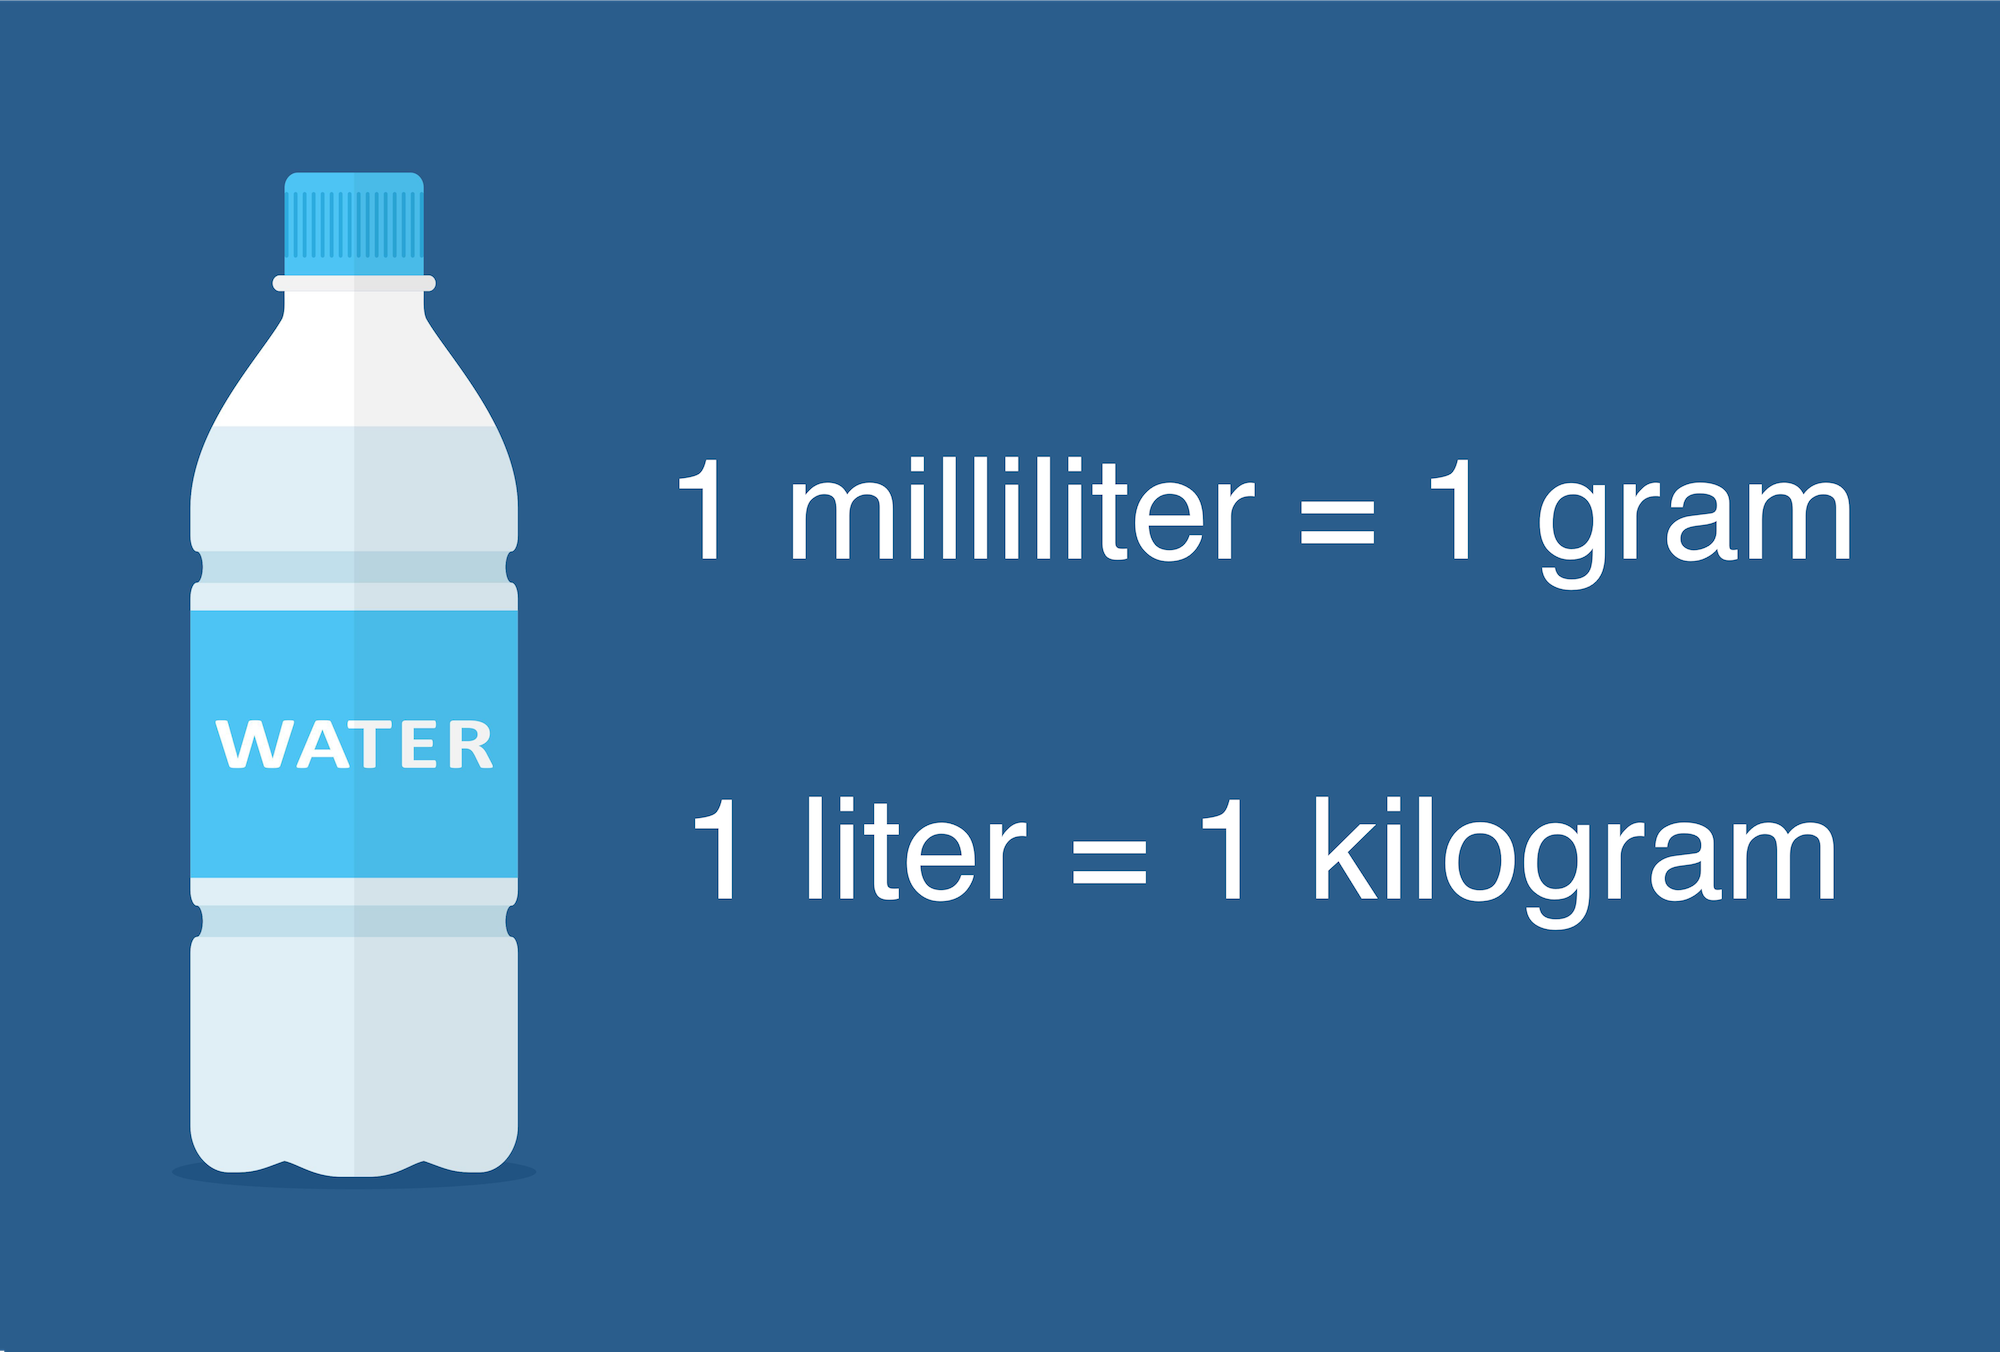 Water Weight Calculator